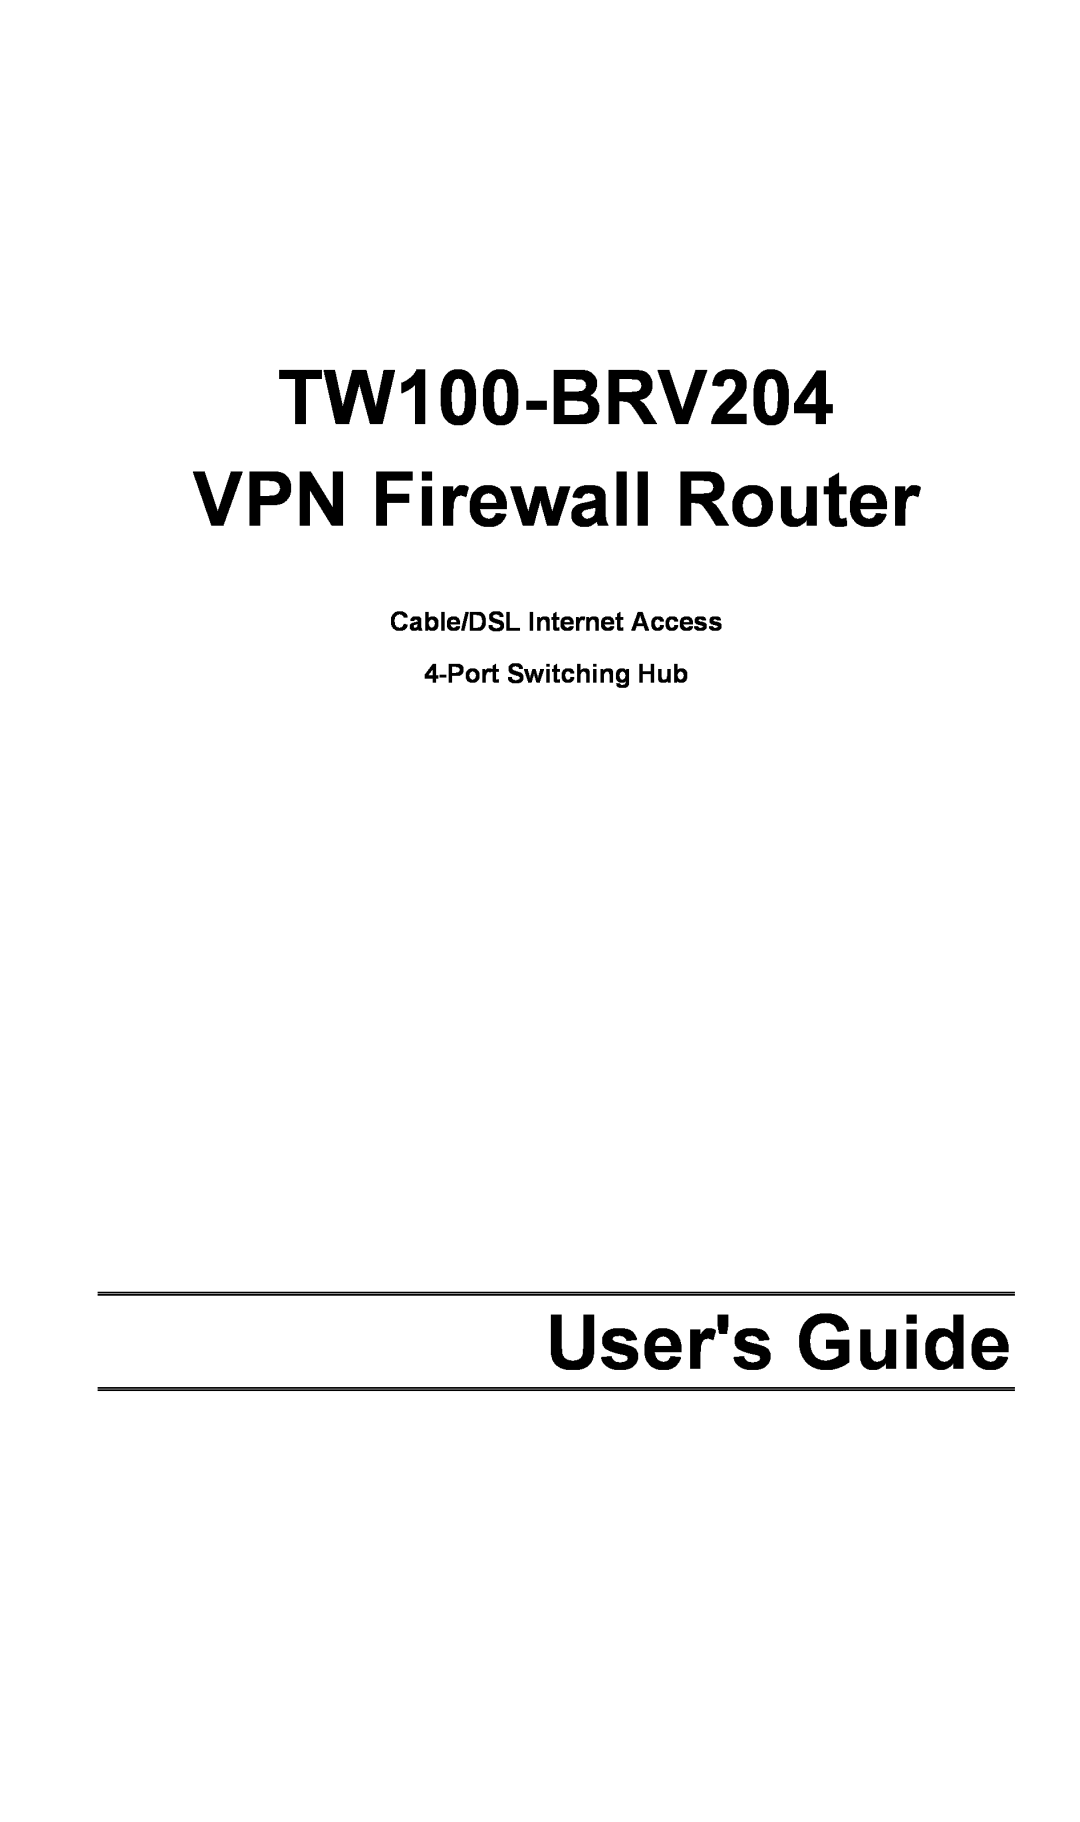 TRENDnet TW100-BRV204 warranty Features, Benefits, TRENDnet, Cable/DSL VPN Firewall Router, Easy Integration, Security 